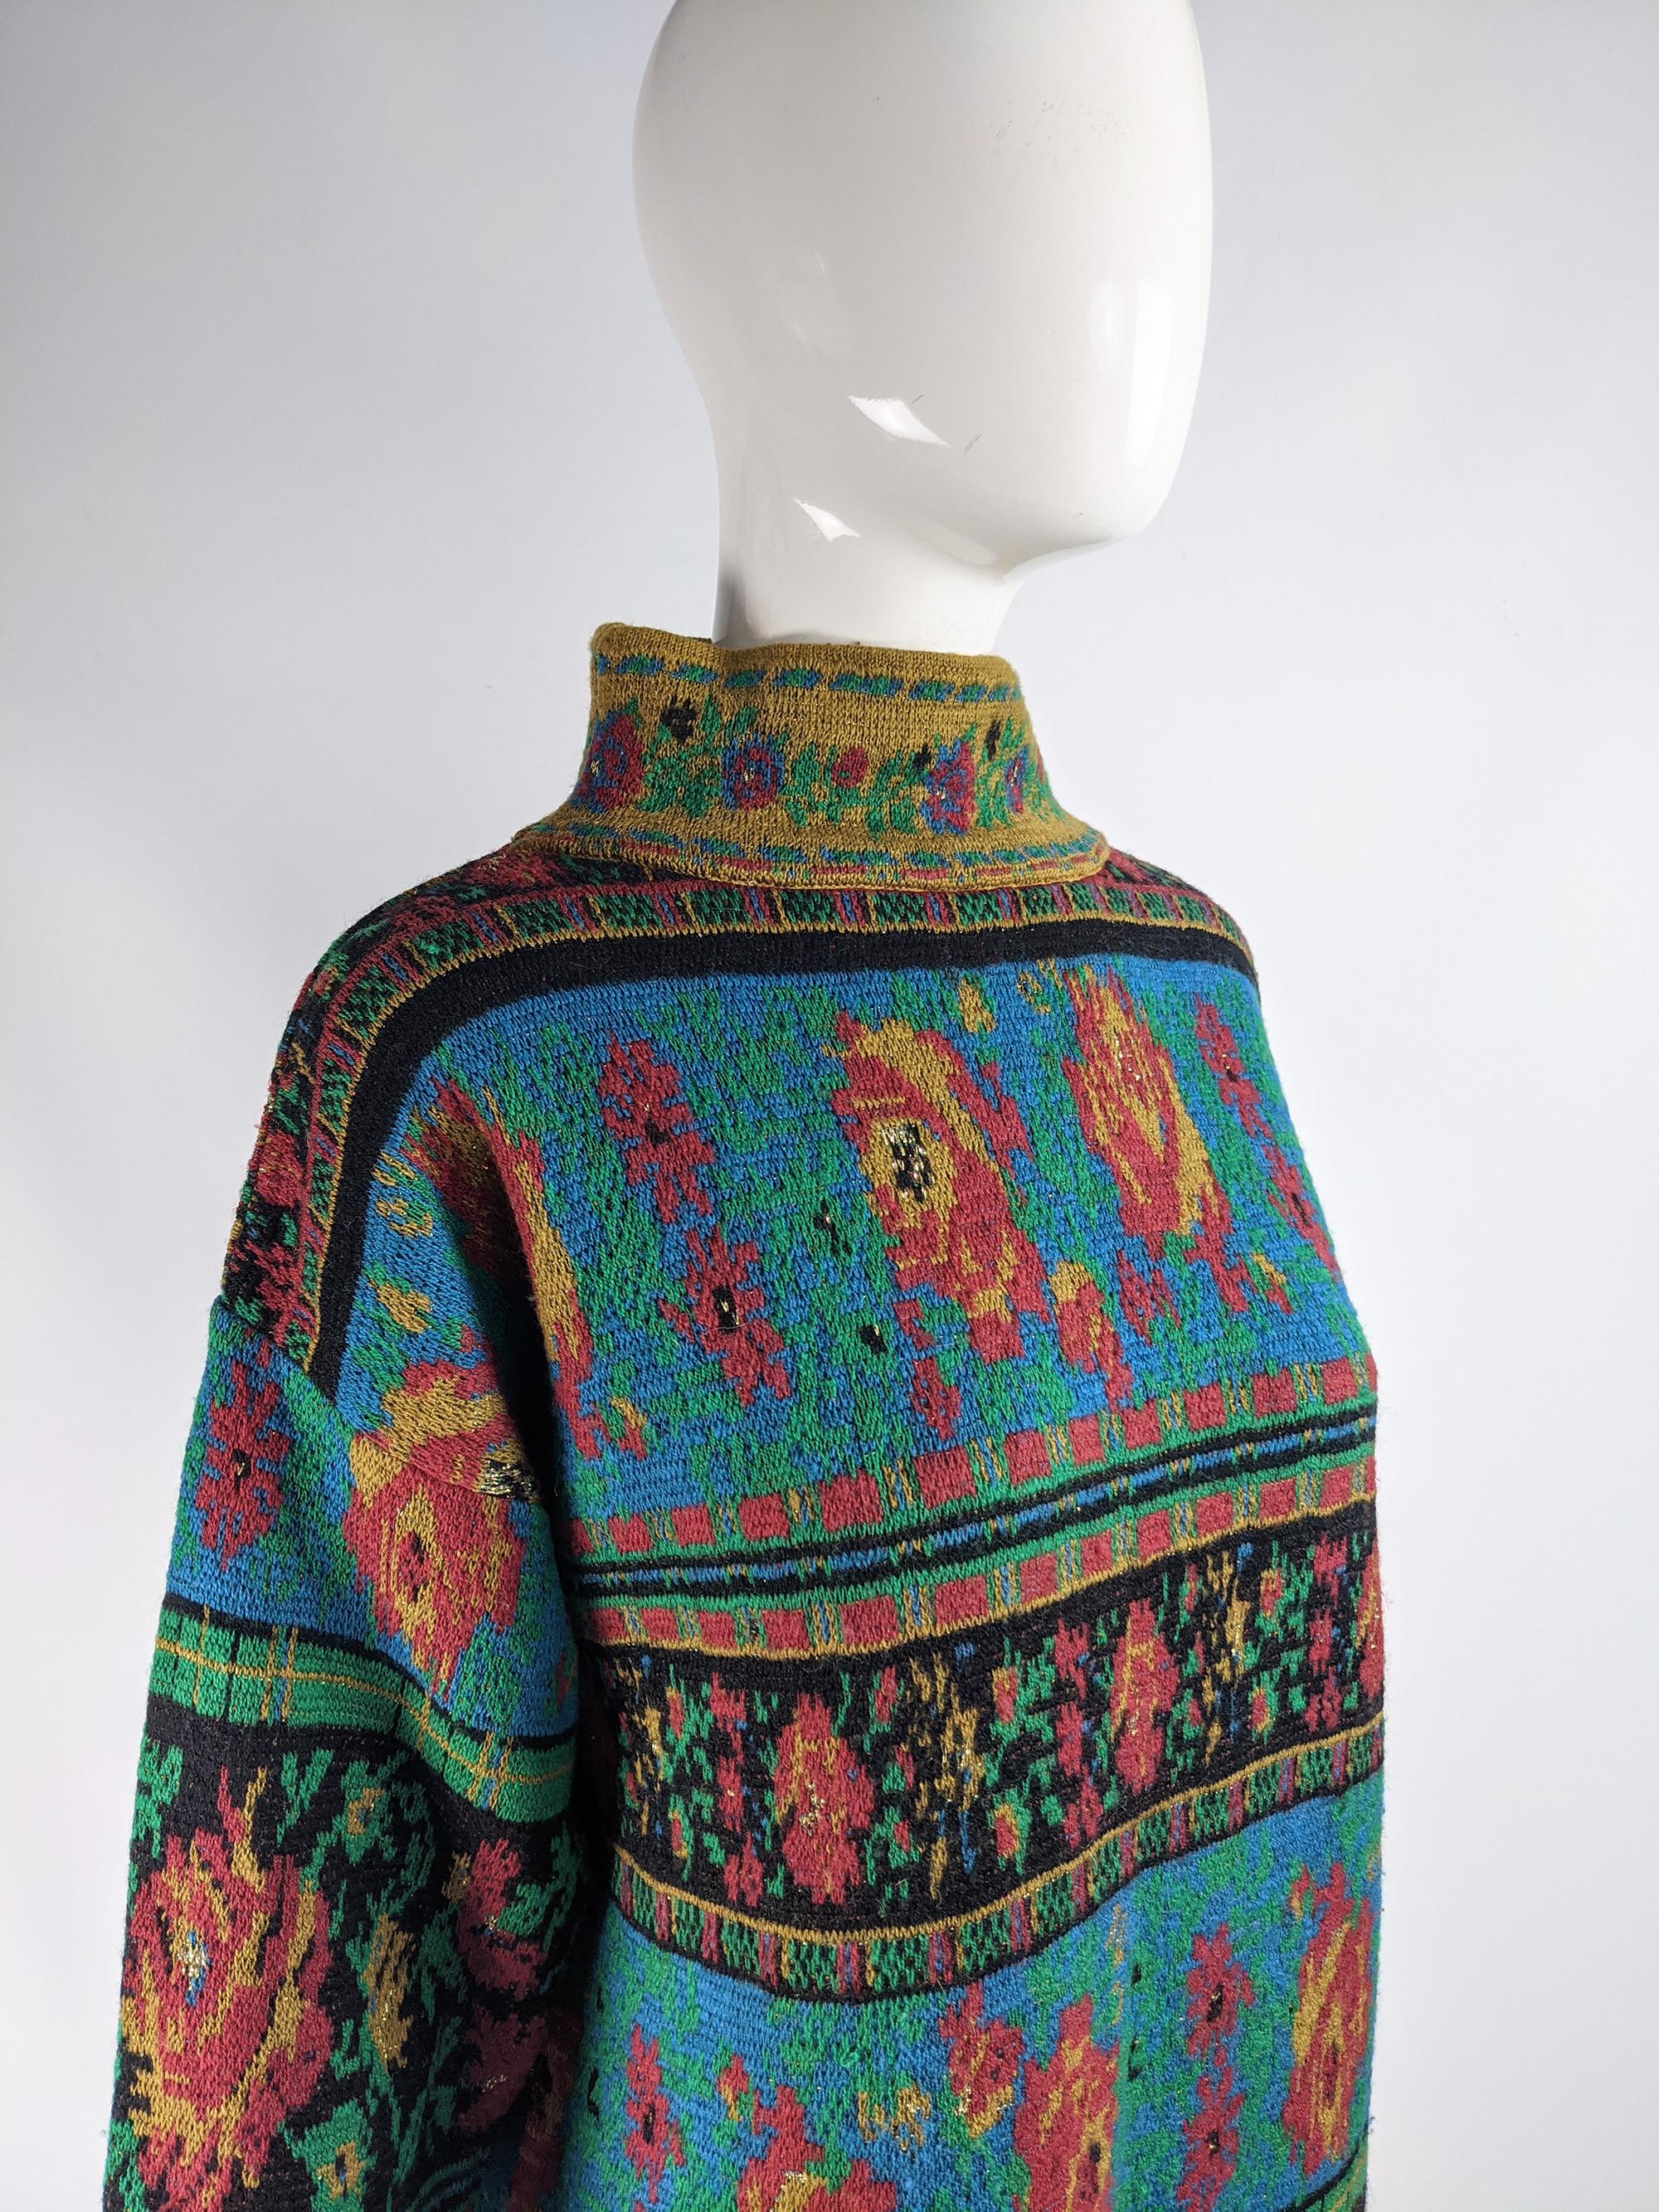 Kenzo Vintage Wool Knit Sweater Dress, 1980s For Sale 1